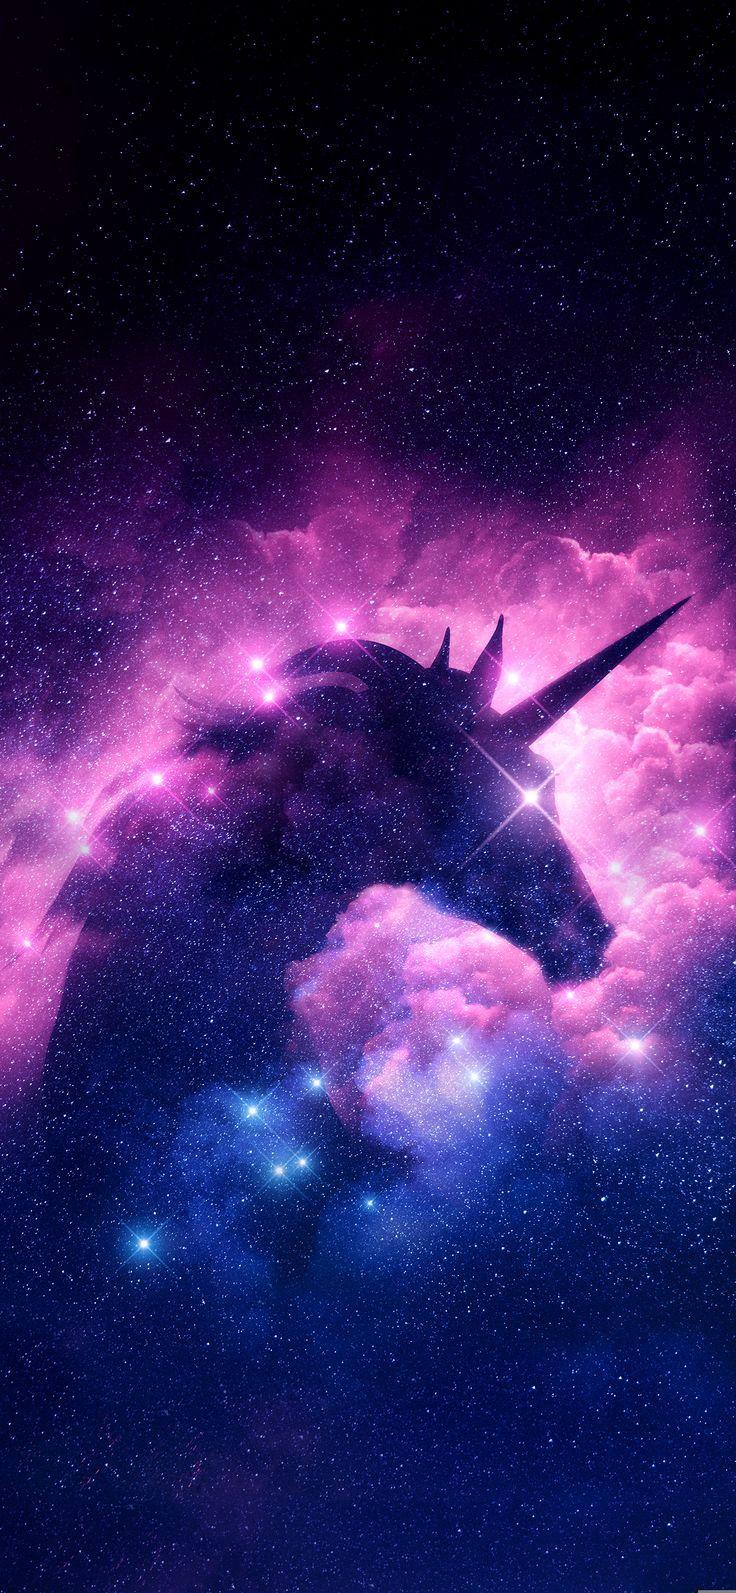 Unicorn Galaxy iPhone Wallpaper #galaxy #iphone #unicorn #wallpaper